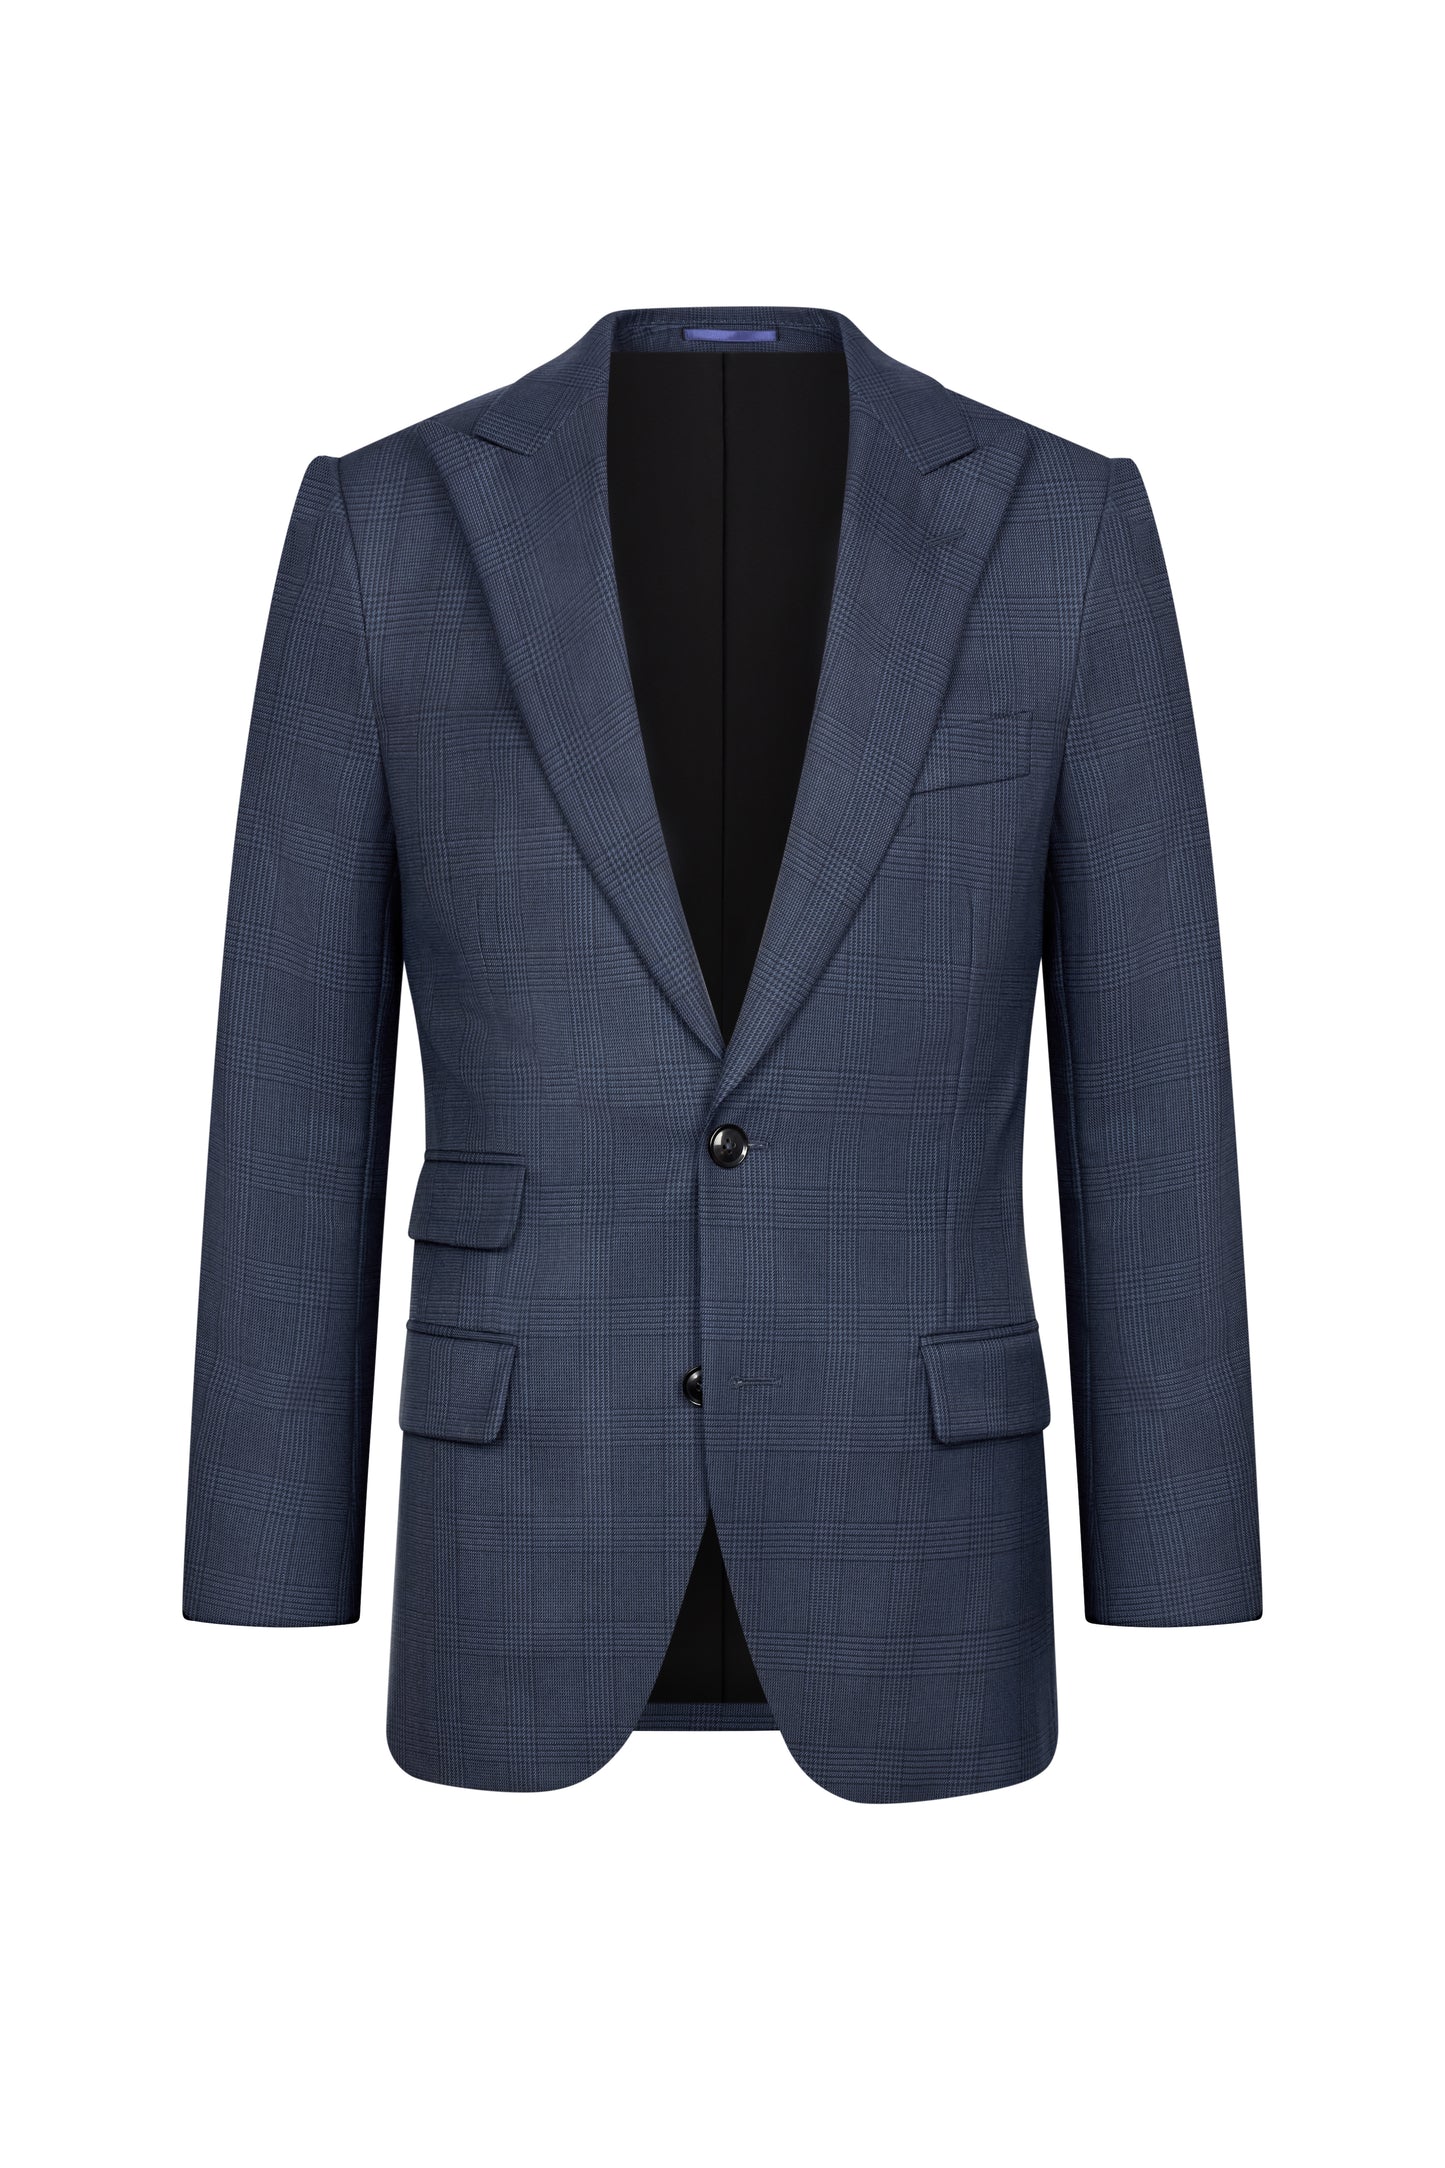 Holland & Sherry Navy Blue Glen Check Custom Suit